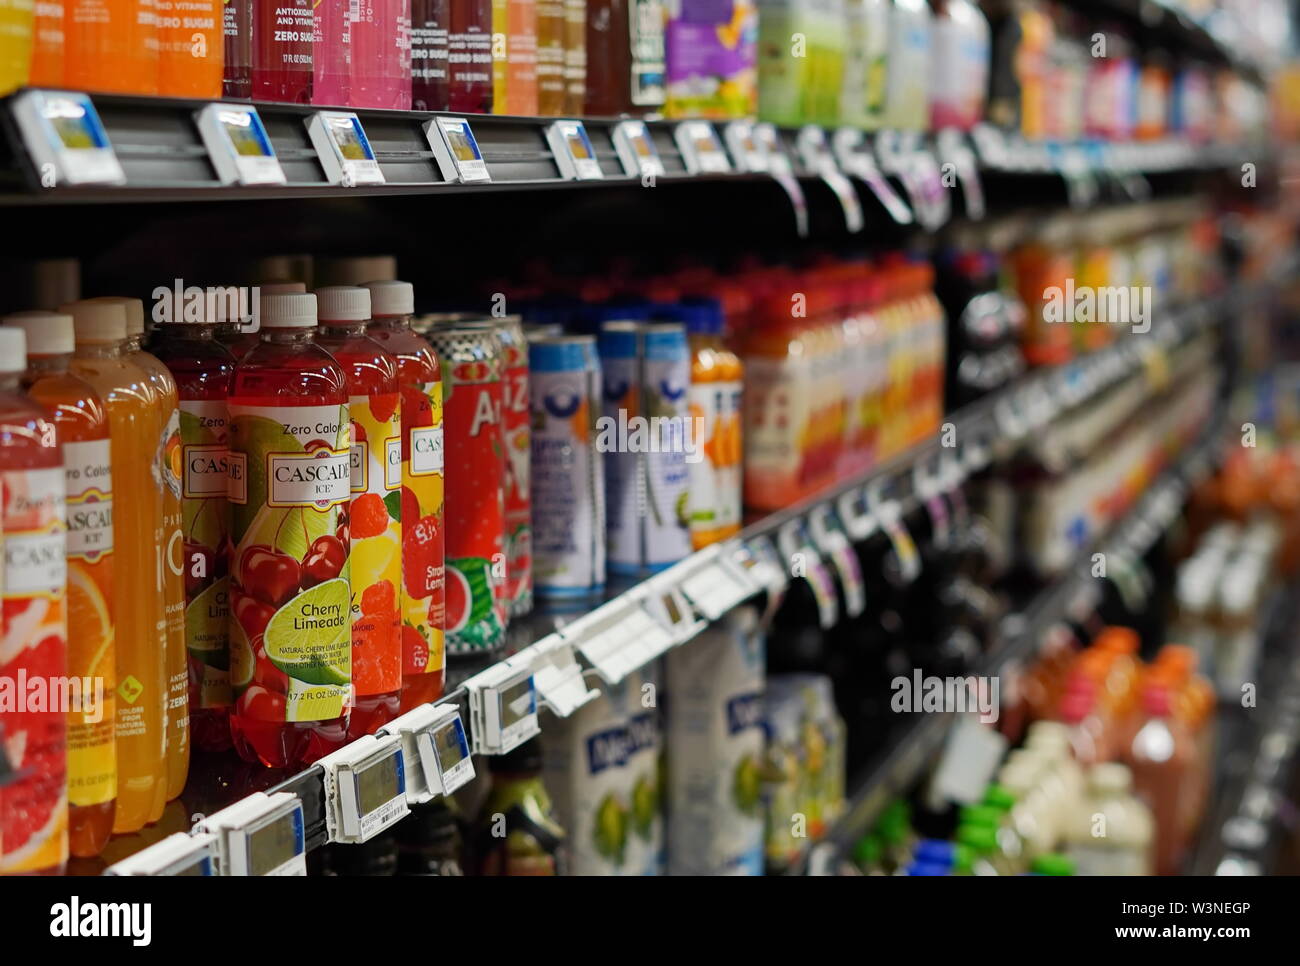 New London, CT / USA - June 2, 2019: Shelves full of health drinks at the supermarket Stock Photo